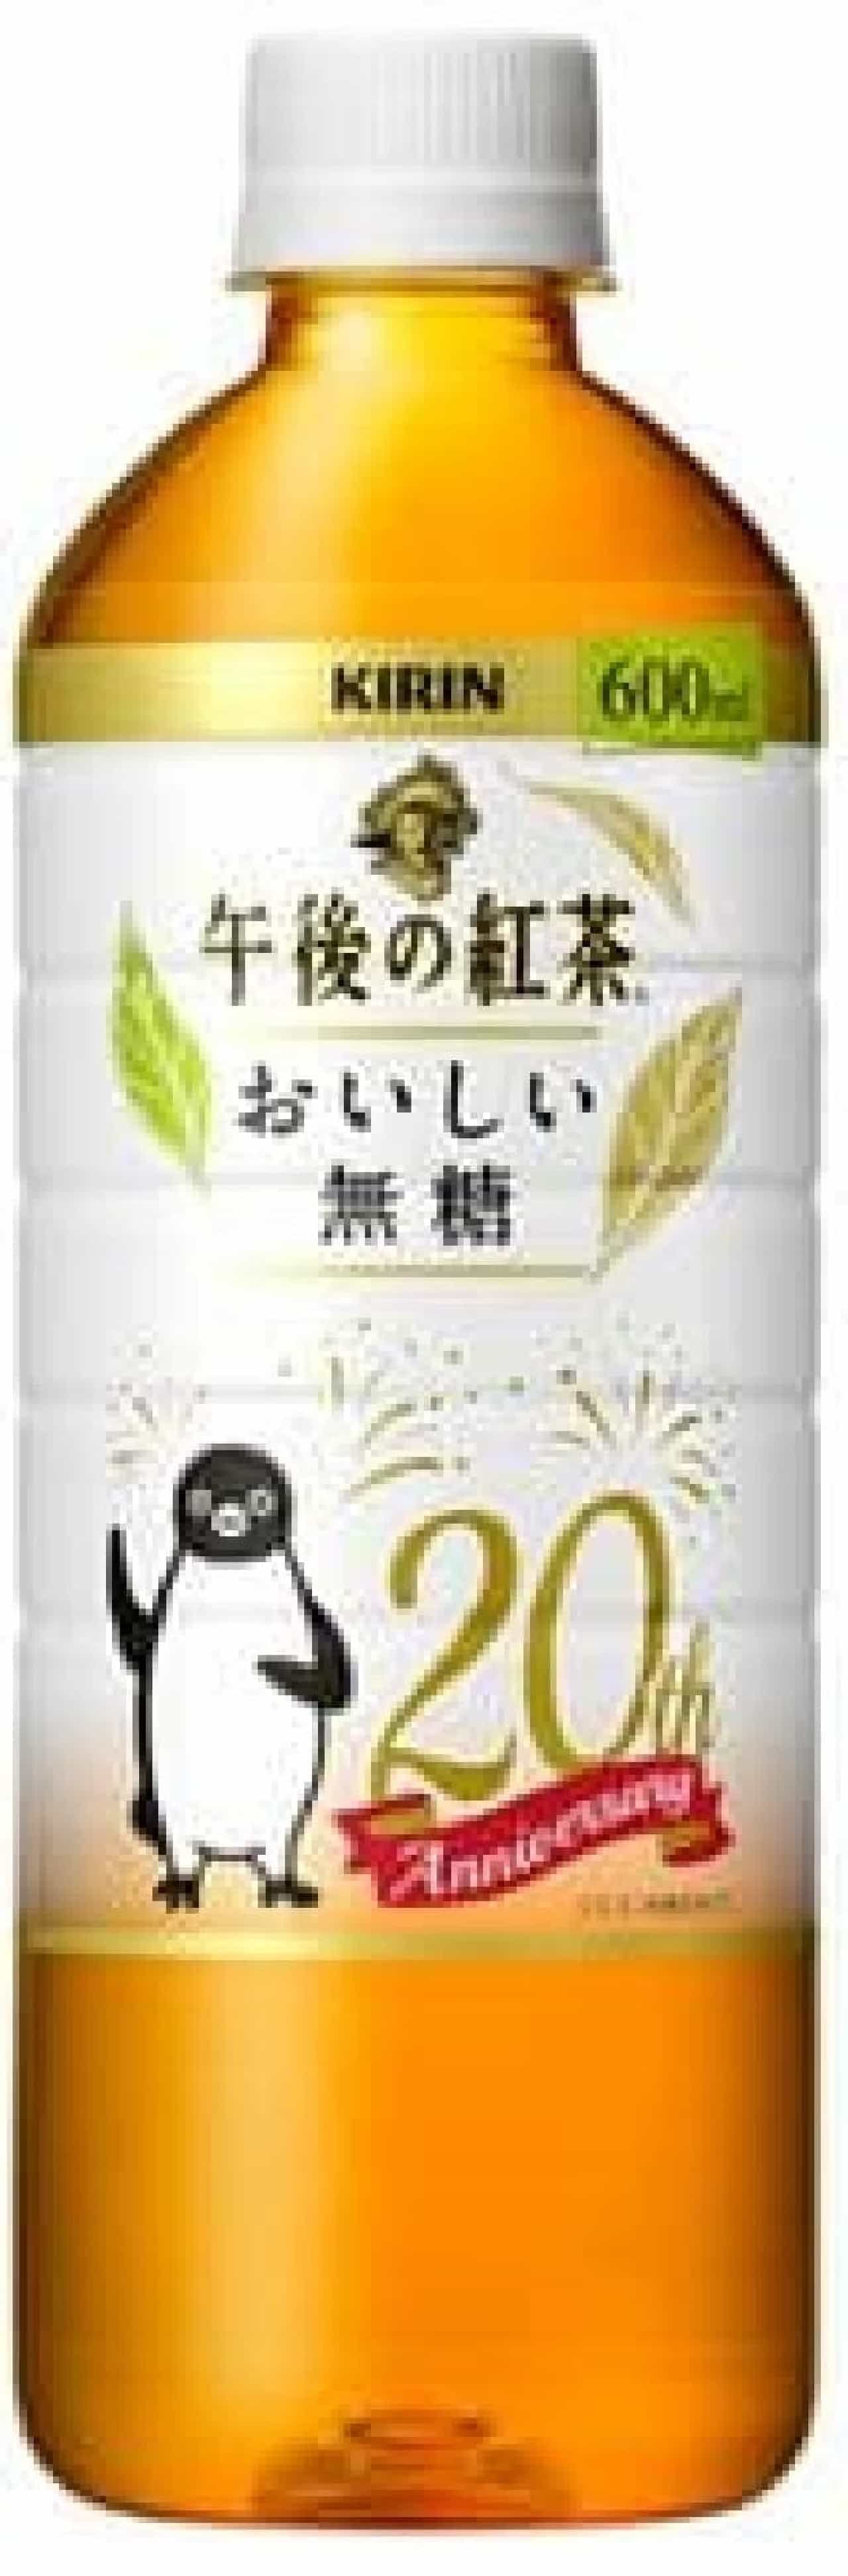 NewDays「午後の紅茶おいしい無糖 Suicaのペンギン 20周年デザインボトル 600ml」